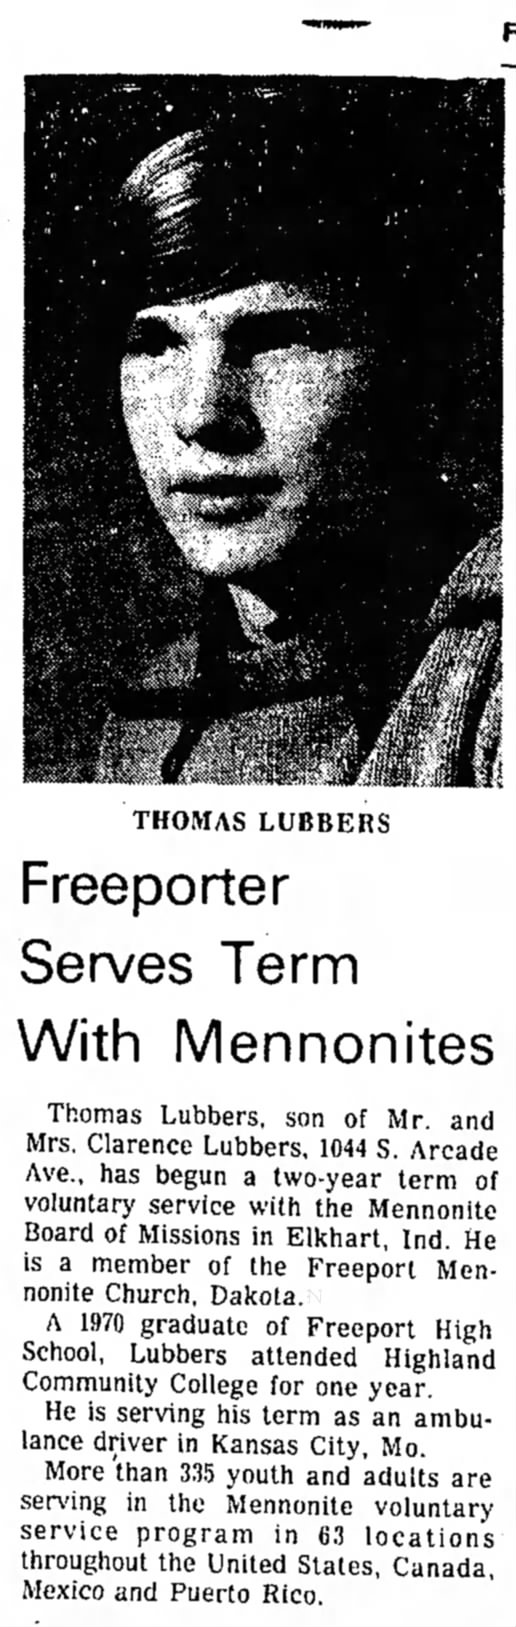 Thomas Lubbers